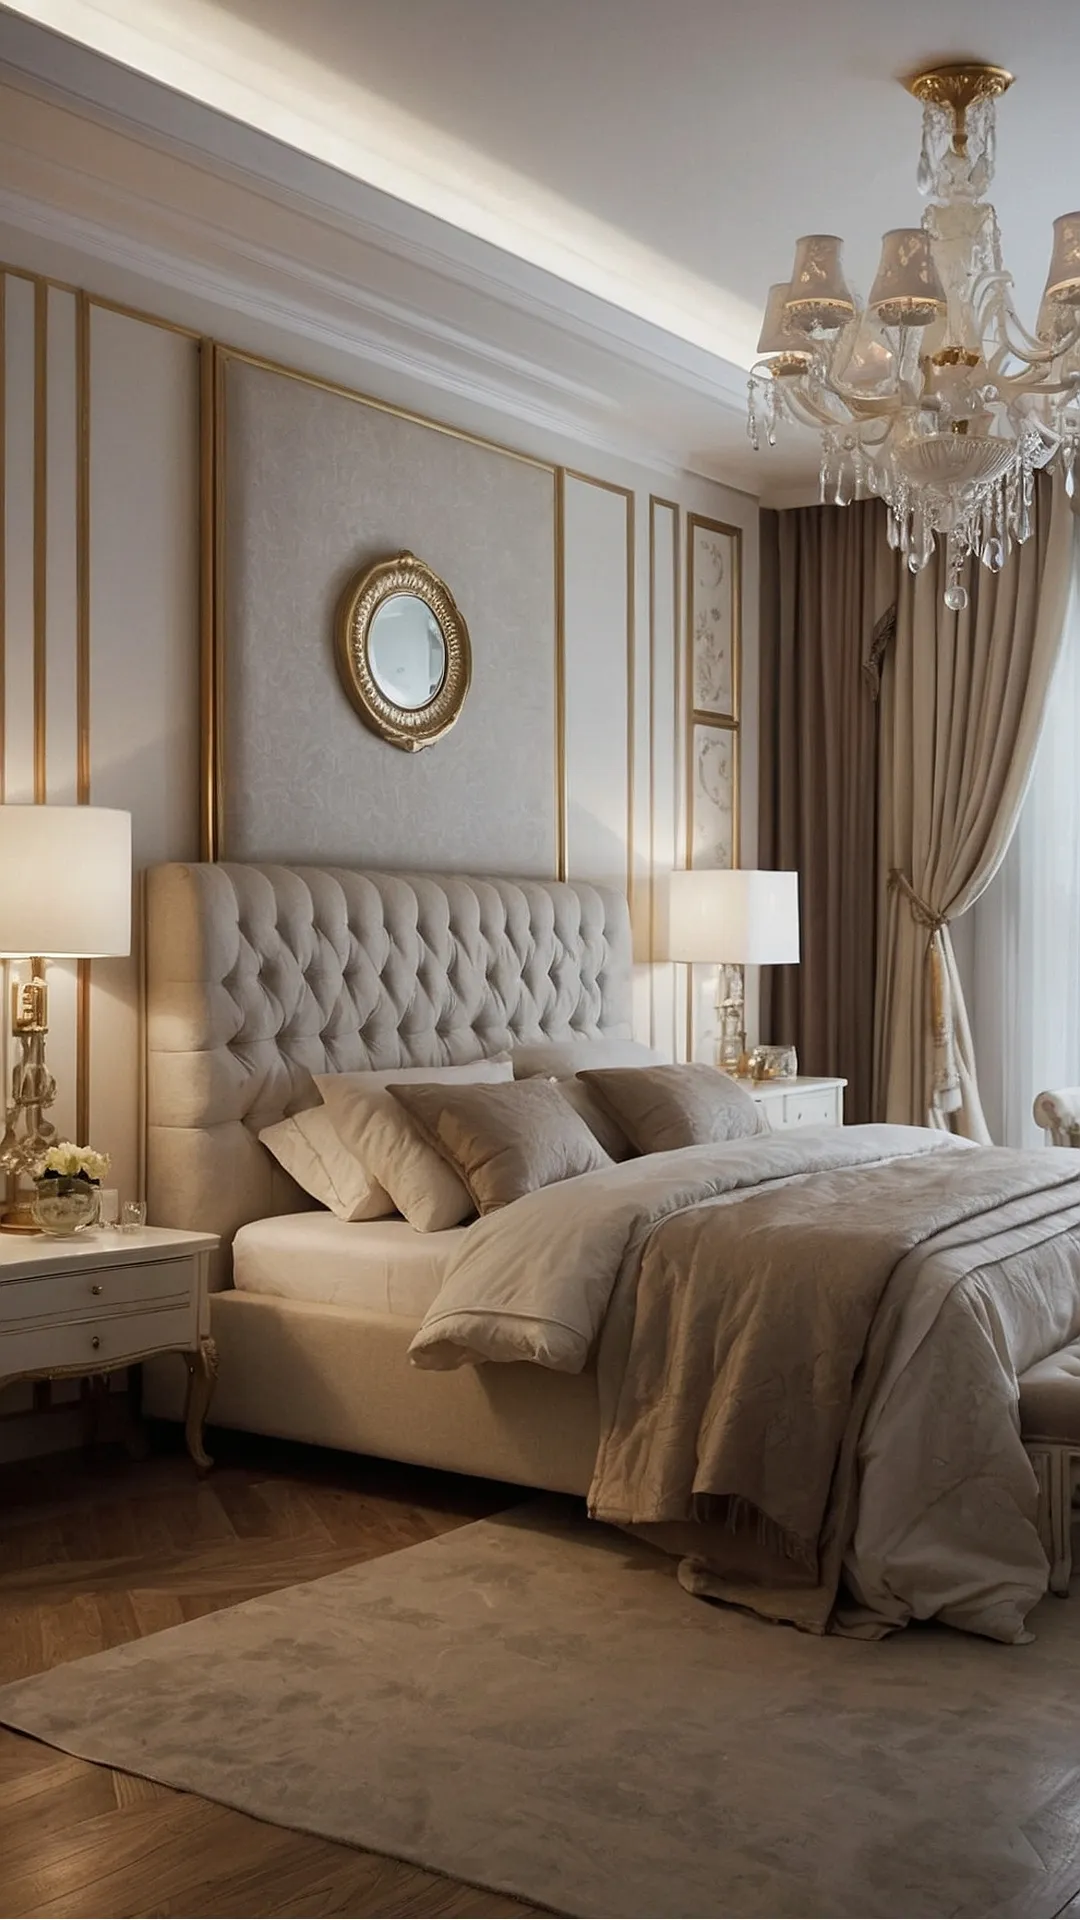 Upscale Bedrooms: Classy Design Ideas